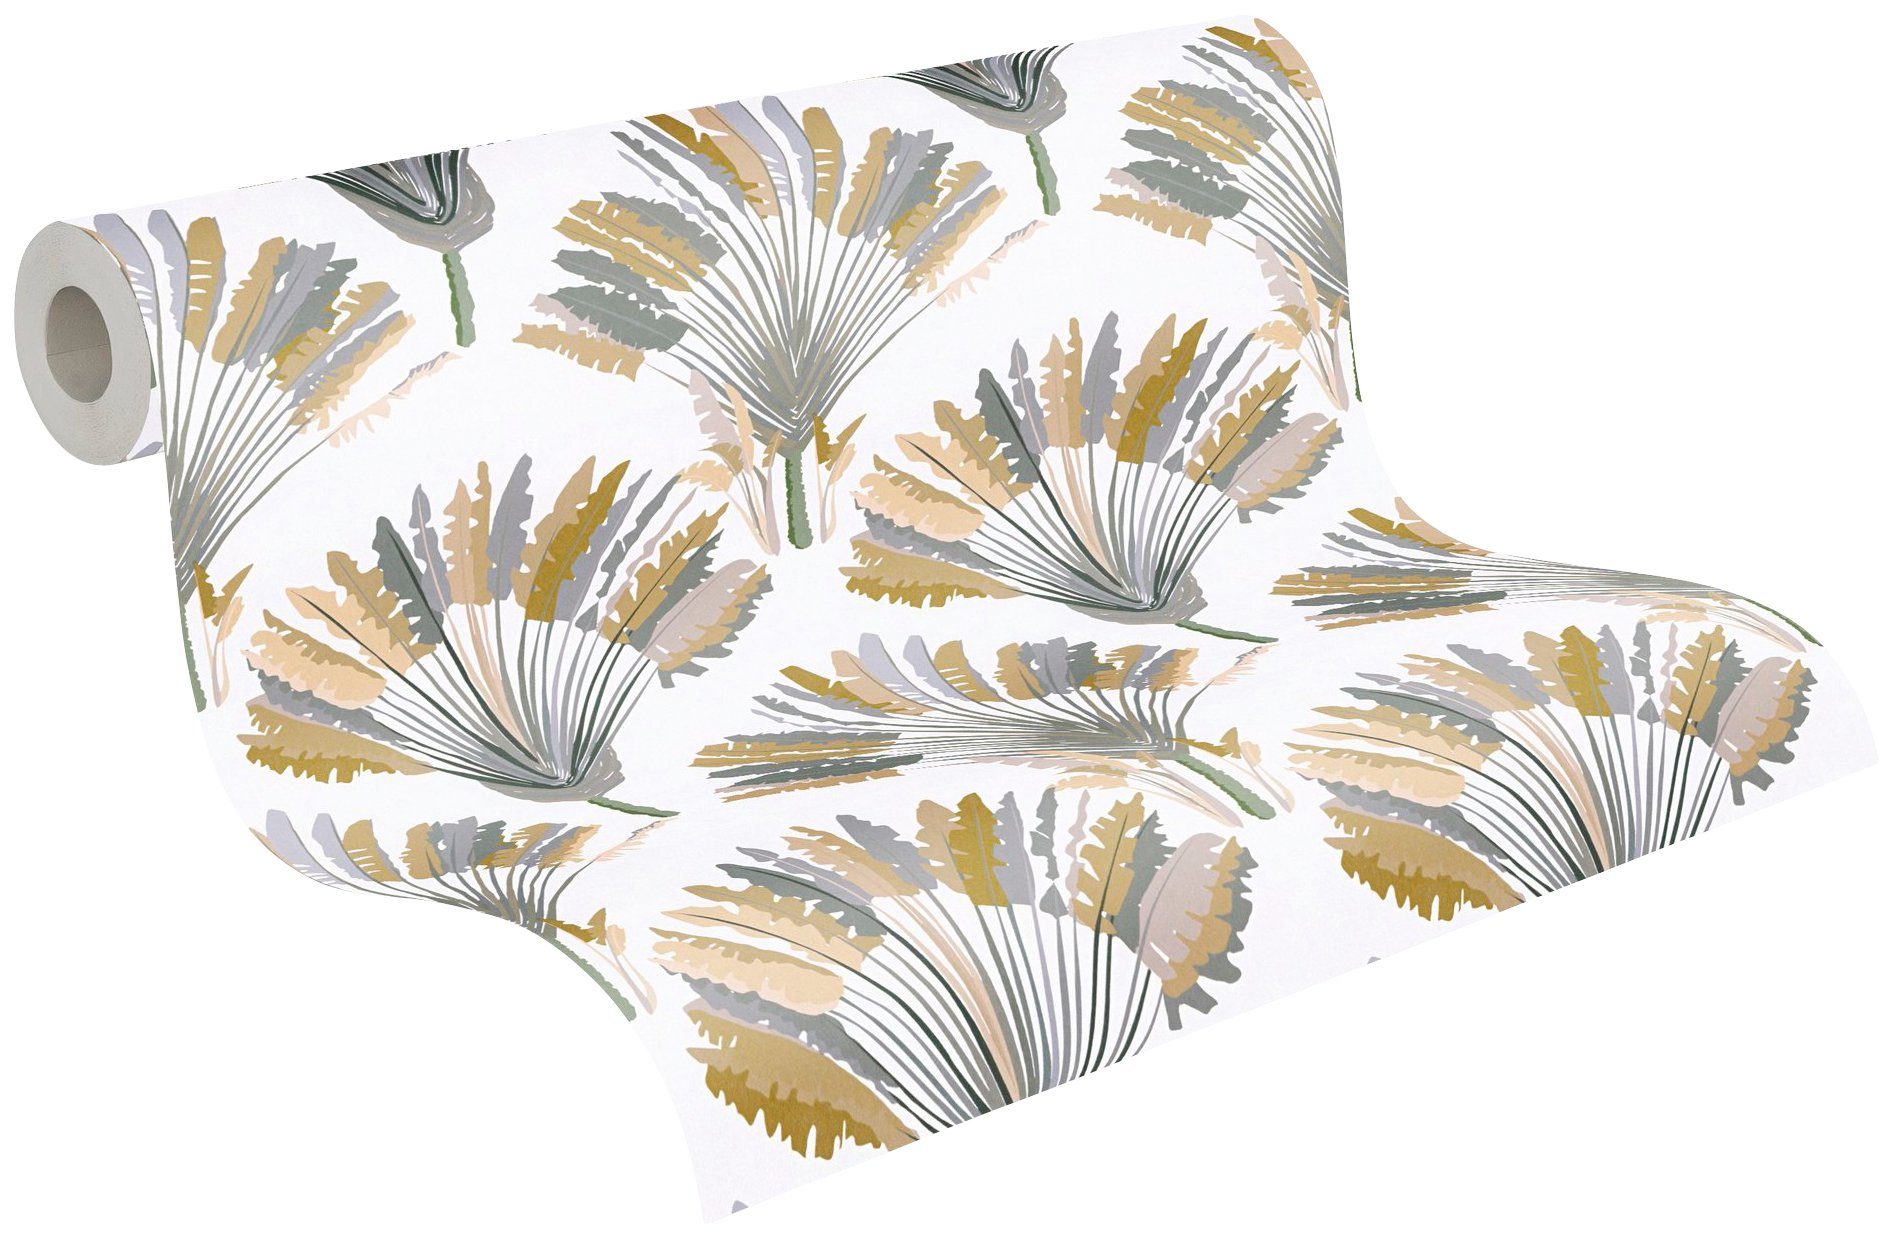 Vliestapete glatt, Création Architects A.S. Jungle floral, Tapete Palmentapete Federn botanisch, Chic, gelb/grau/weiß tropisch, Paper Dschungel